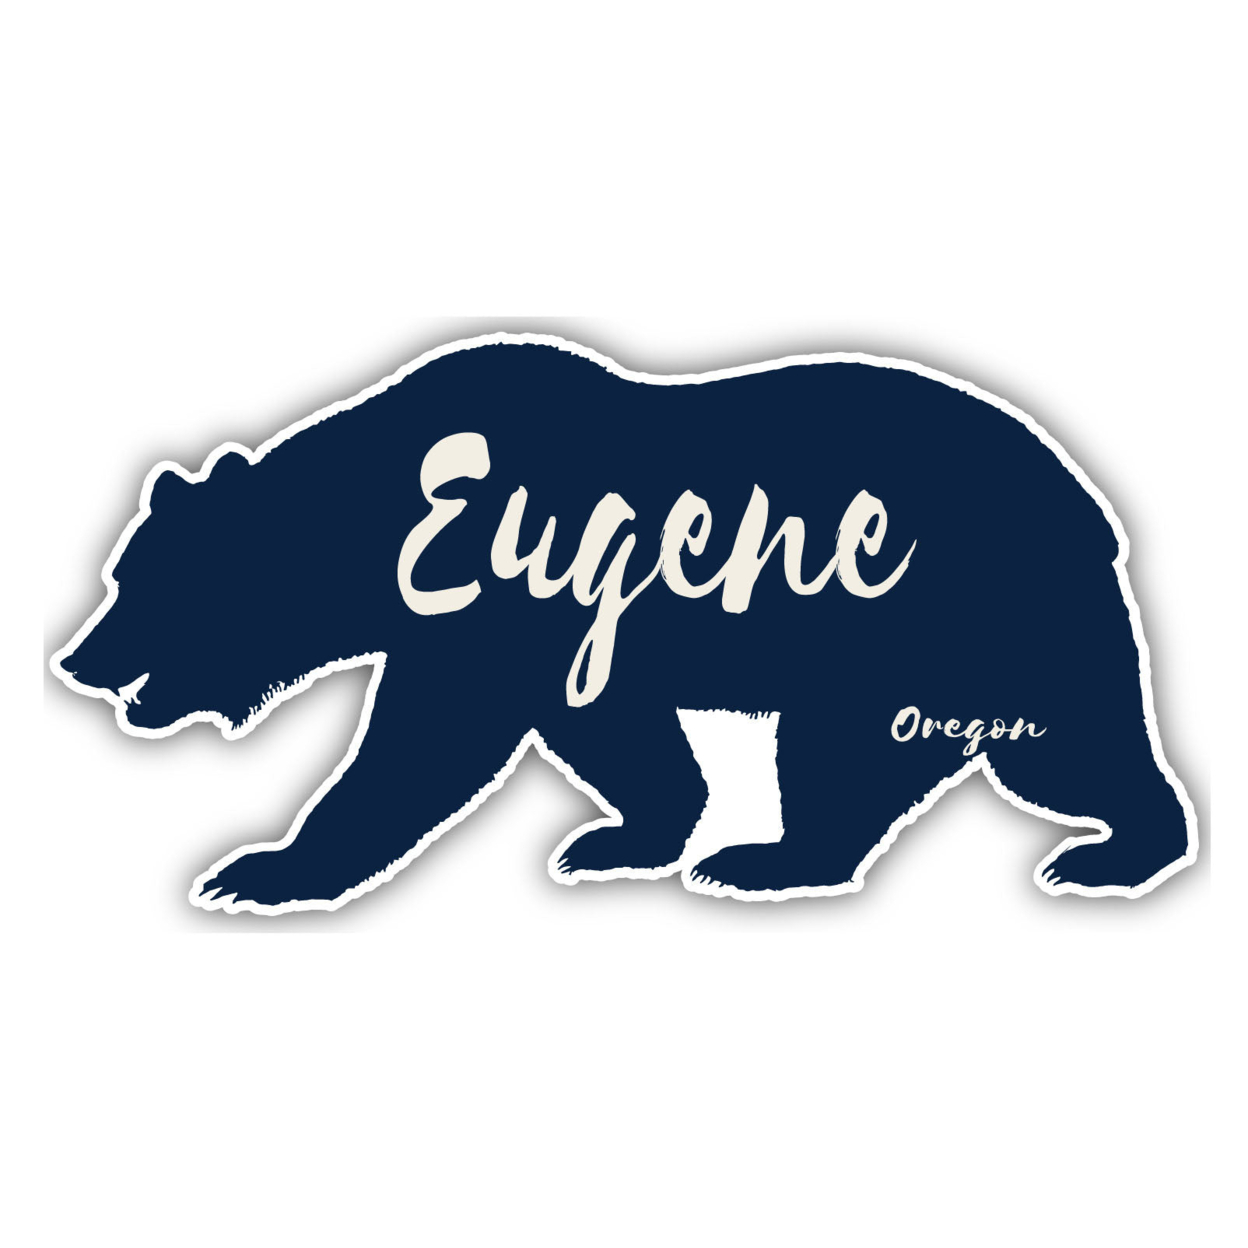 Eugene Oregon Souvenir Decorative Stickers (Choose Theme And Size) - 4-Pack, 2-Inch, Bear